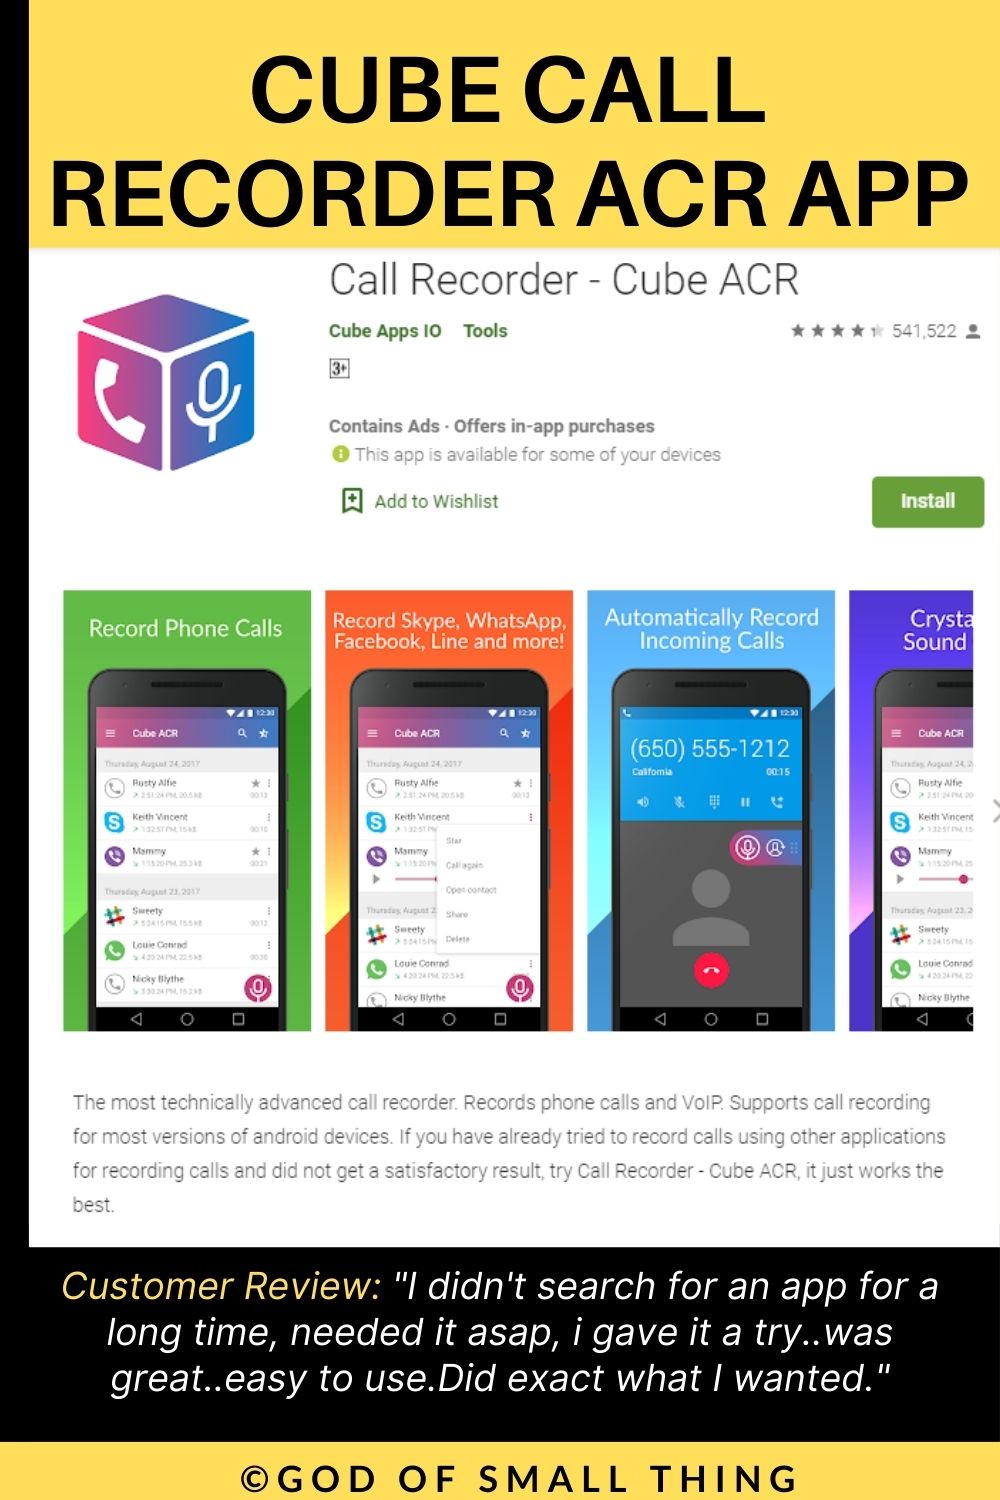 Cube call recorder ACR app call recording app